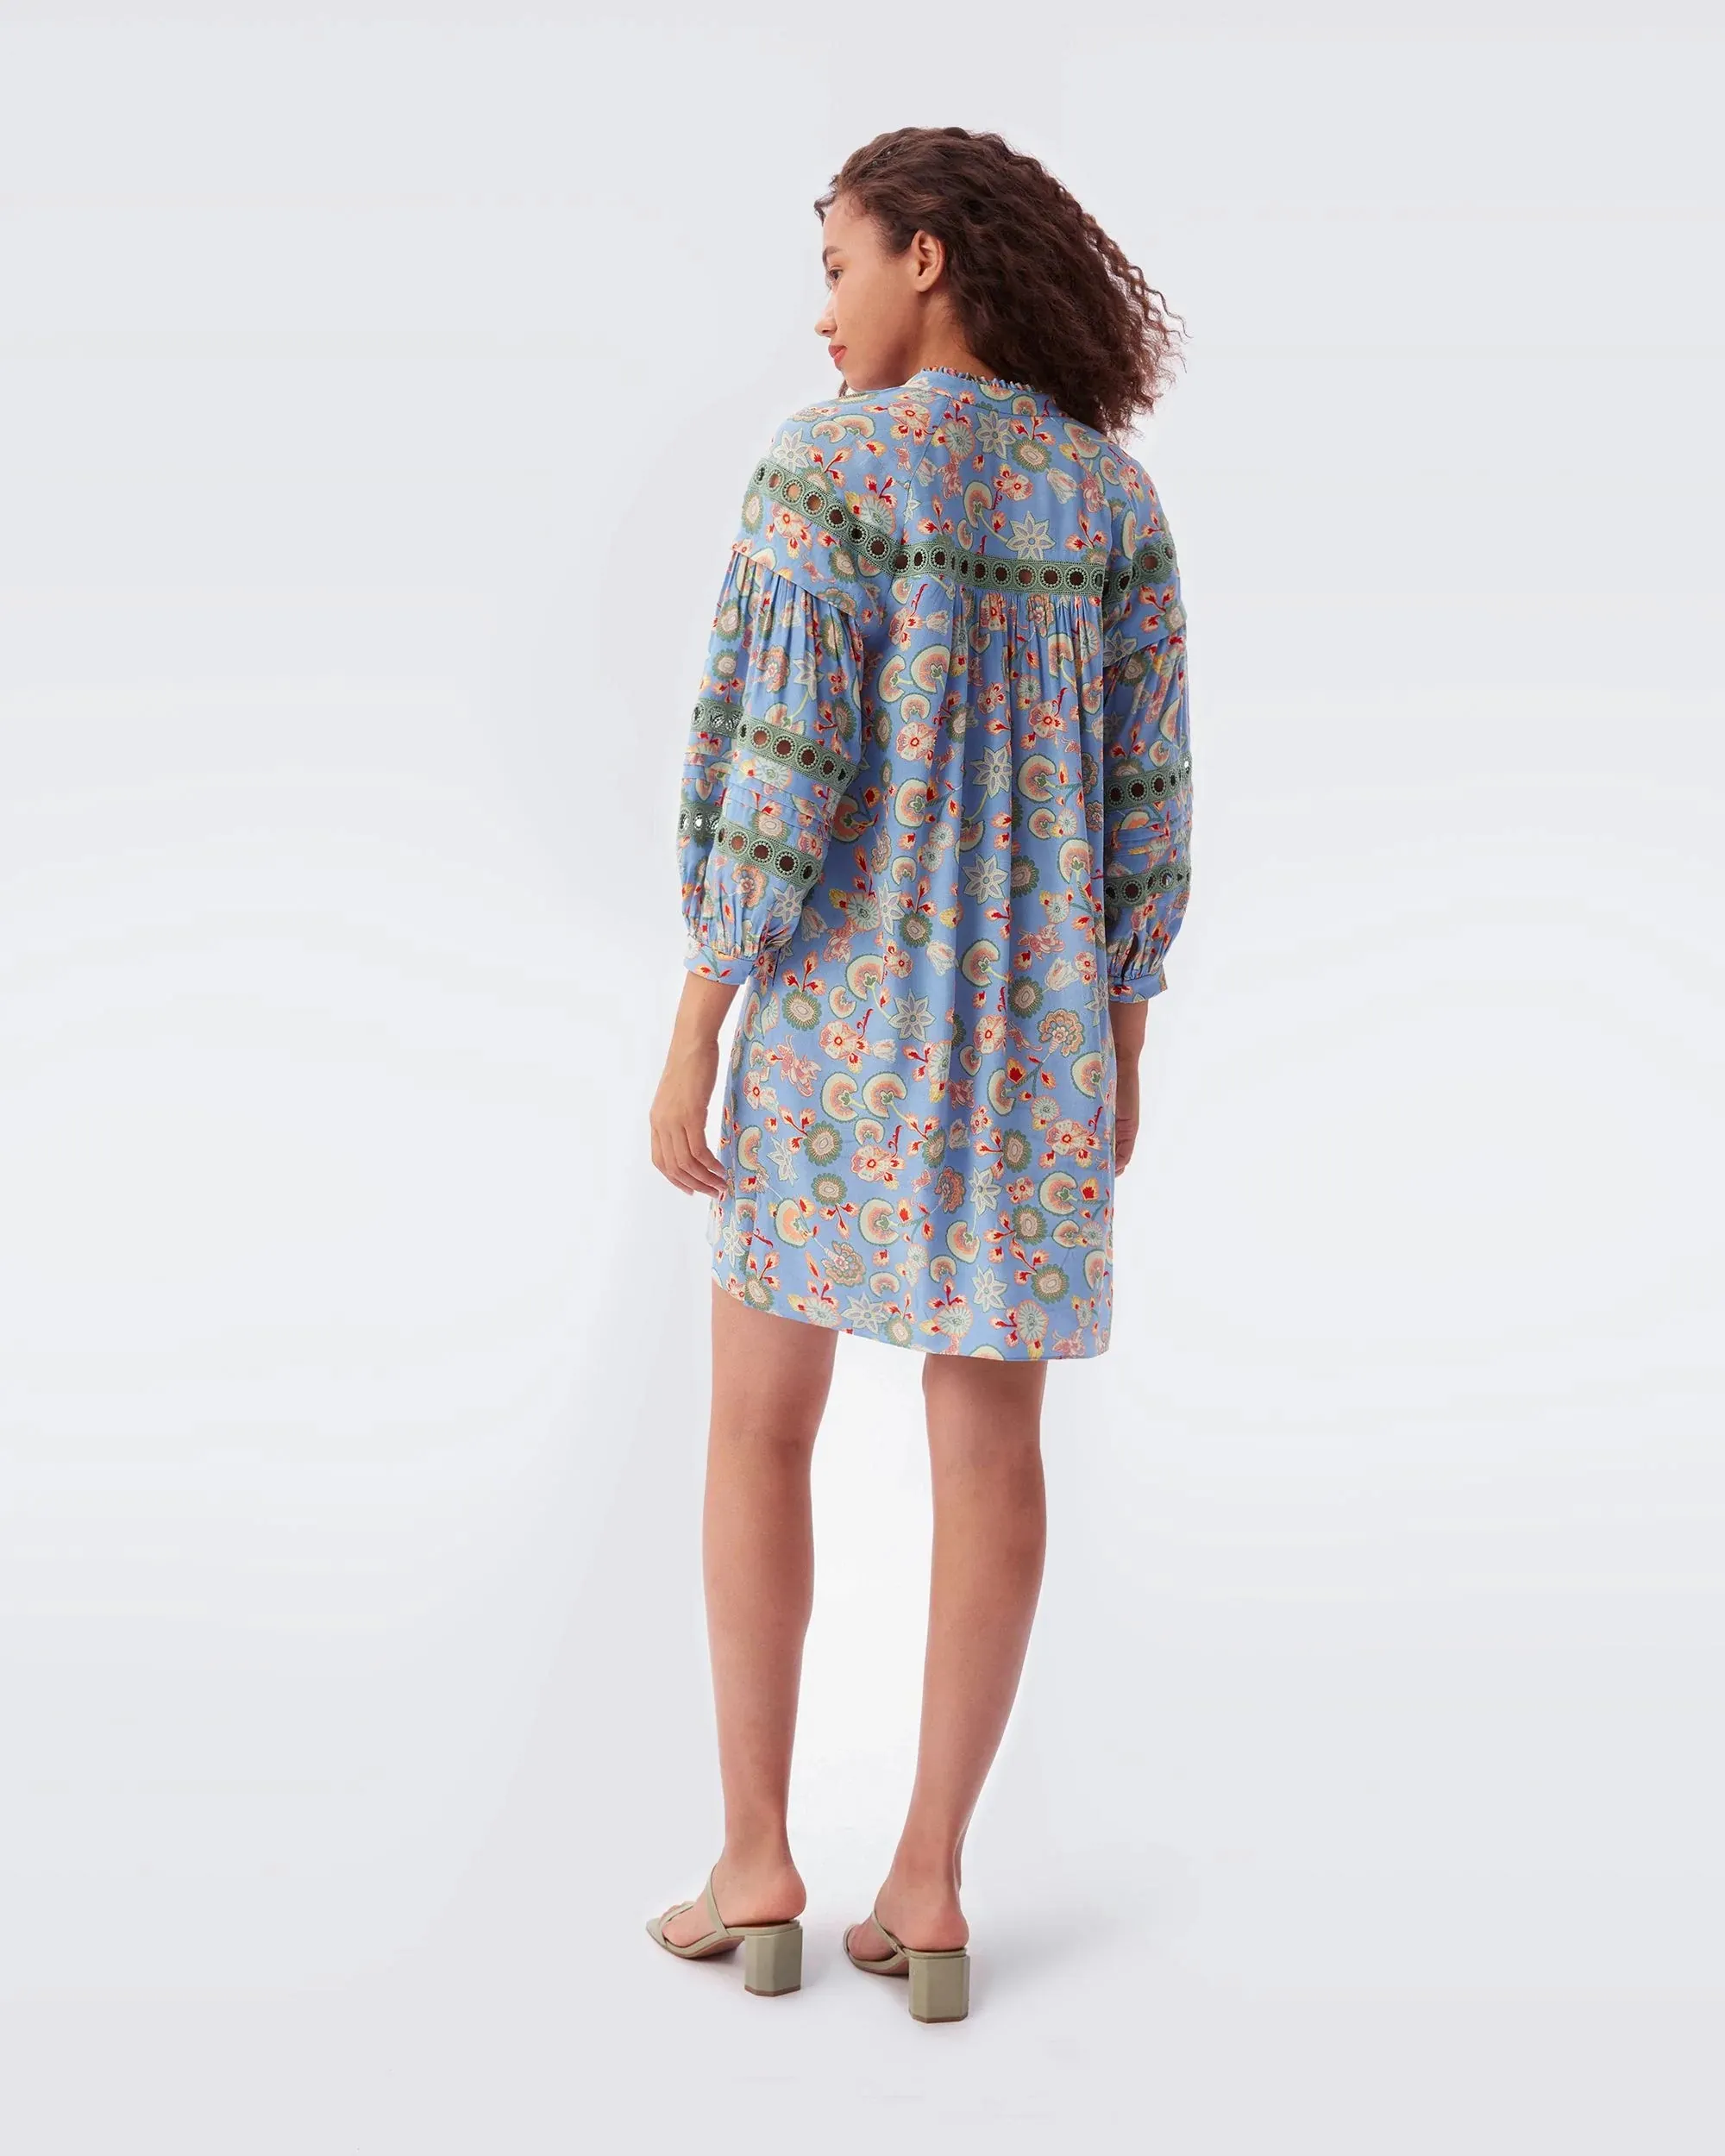 Polyester V Neck Short Sleeve Bohemian Floral Printing Mini Short Dress Maxi Dress Plus Size Beach Boho Dress for Women